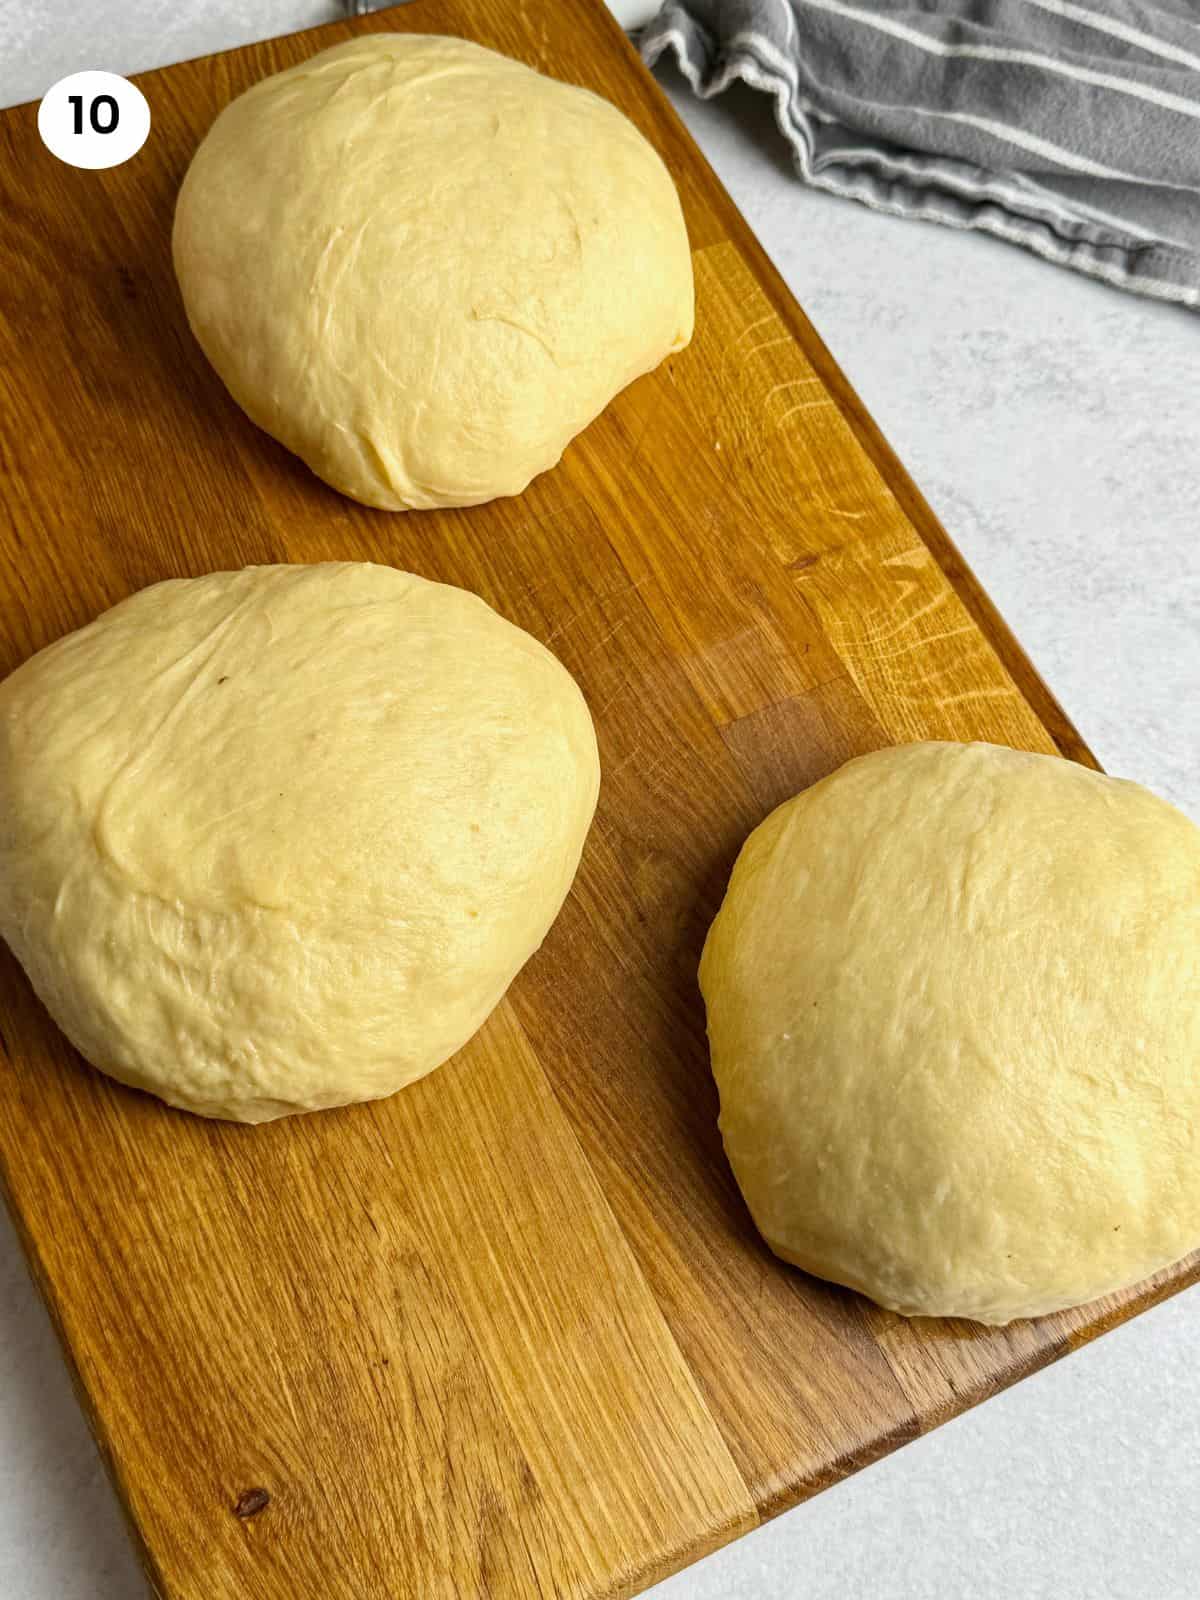 Splitting the dough into 3 big balls.